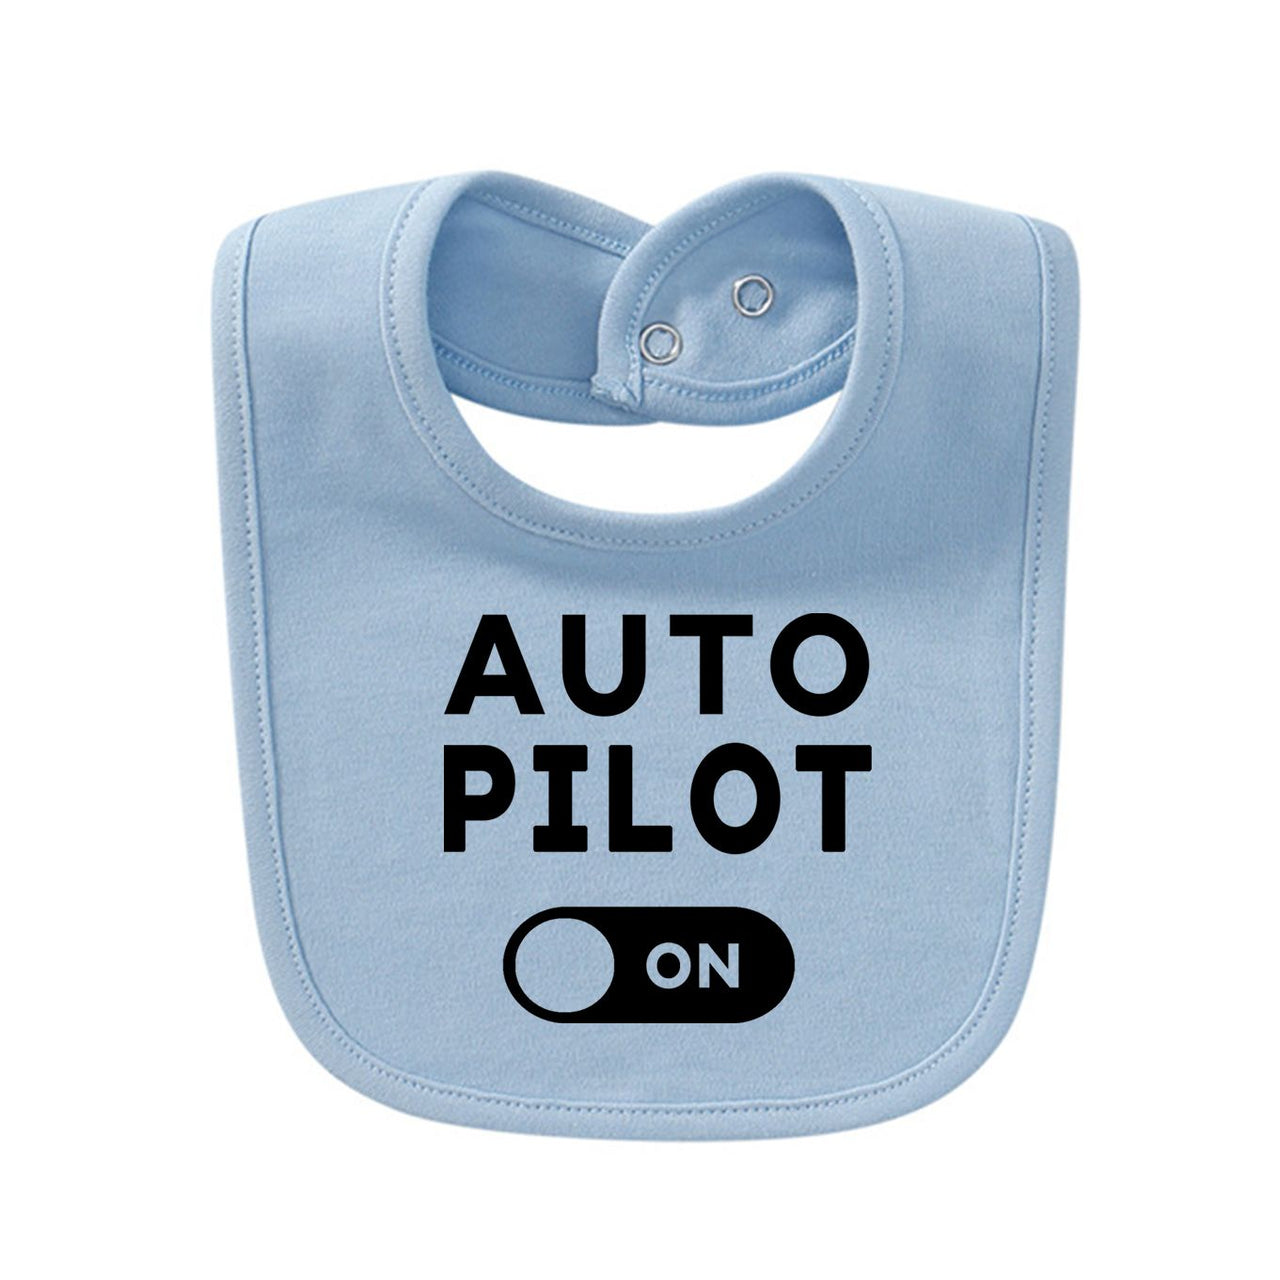 Auto Pilot ON Designed Baby Saliva & Feeding Towels